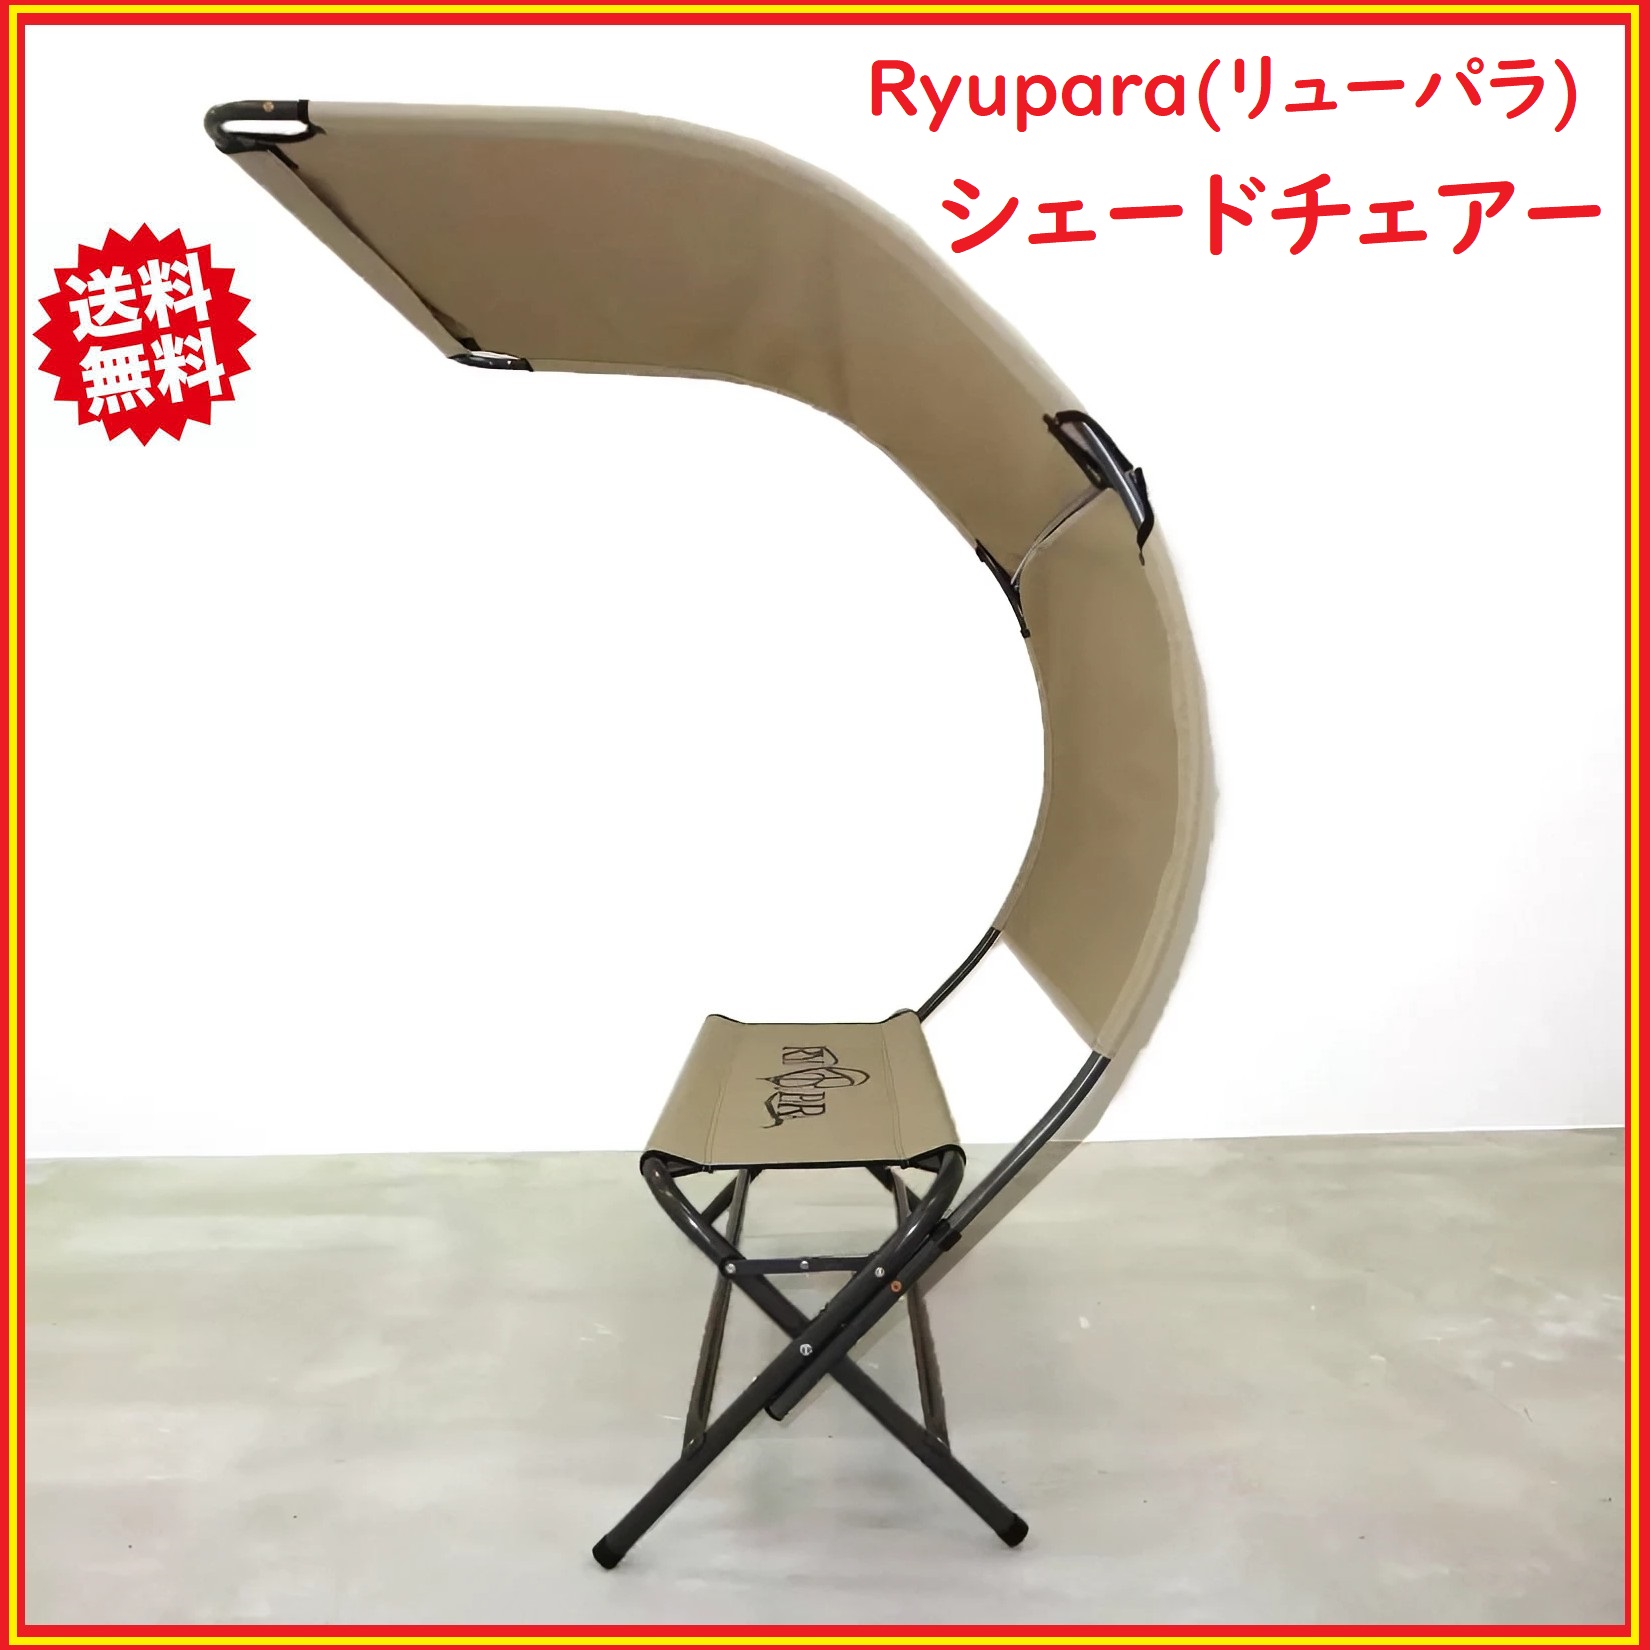 Ryupara(リューパラ) シェードチェアー コストコ 日除け屋根 収納 